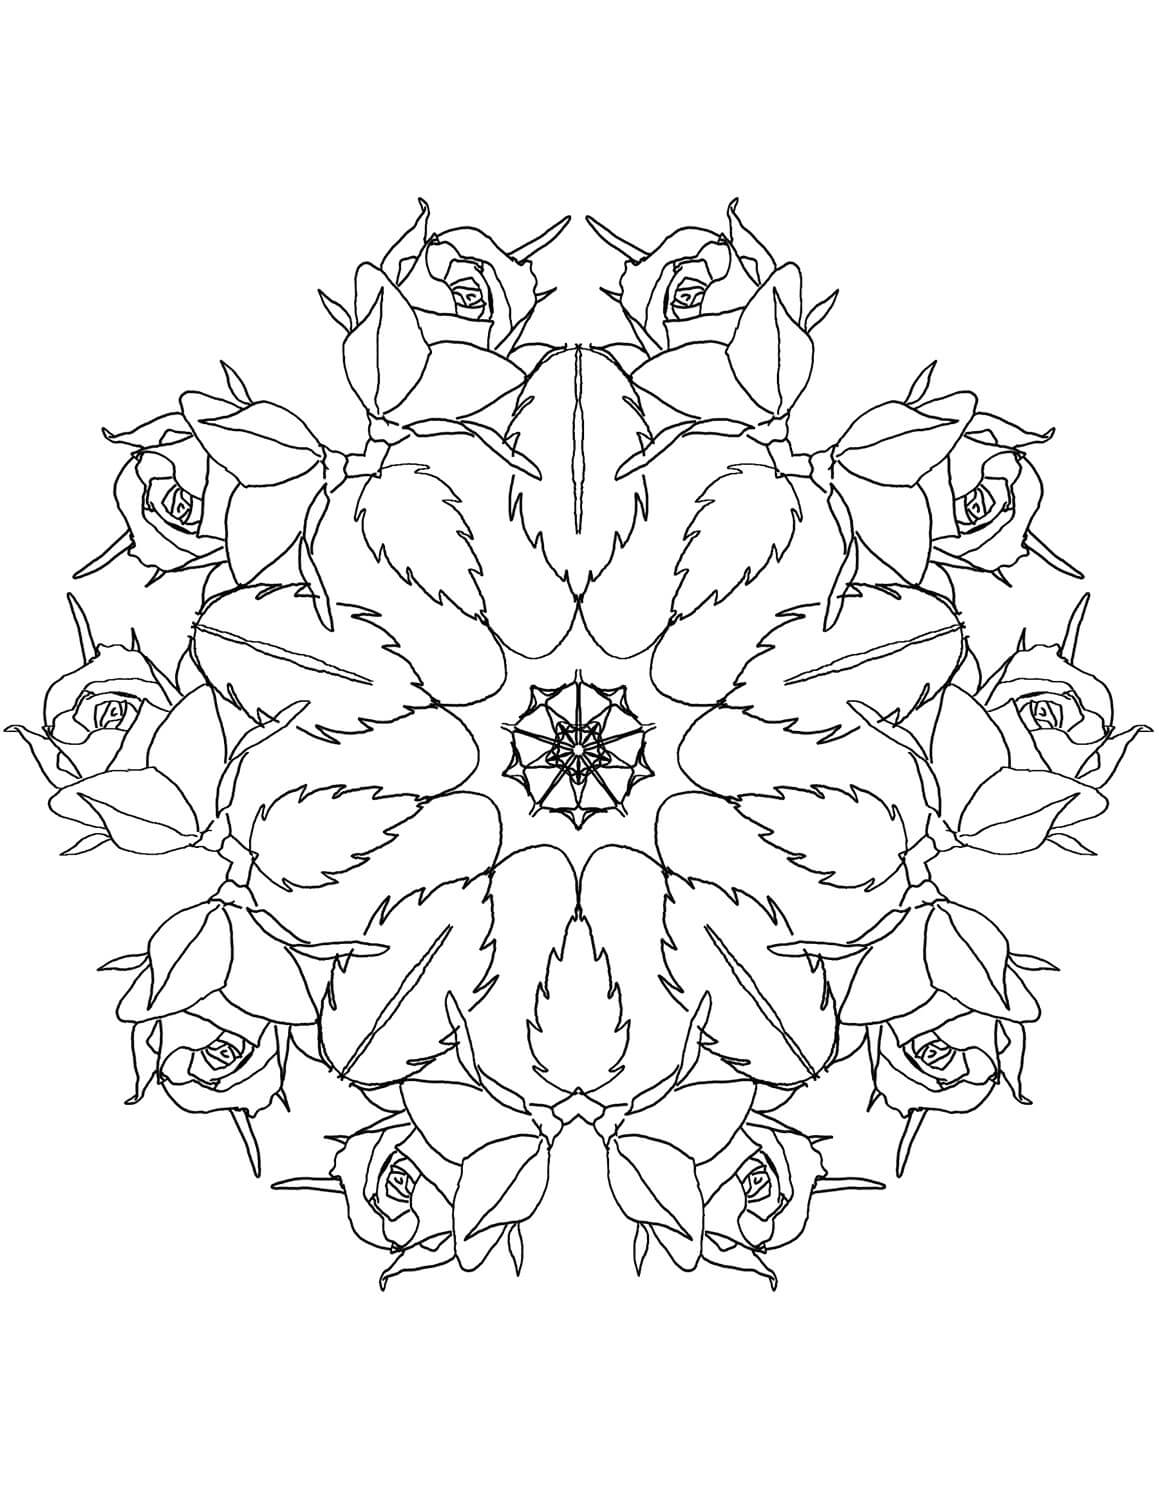 Mandala Rose Coloring Page - Sheet 3 Mandalas